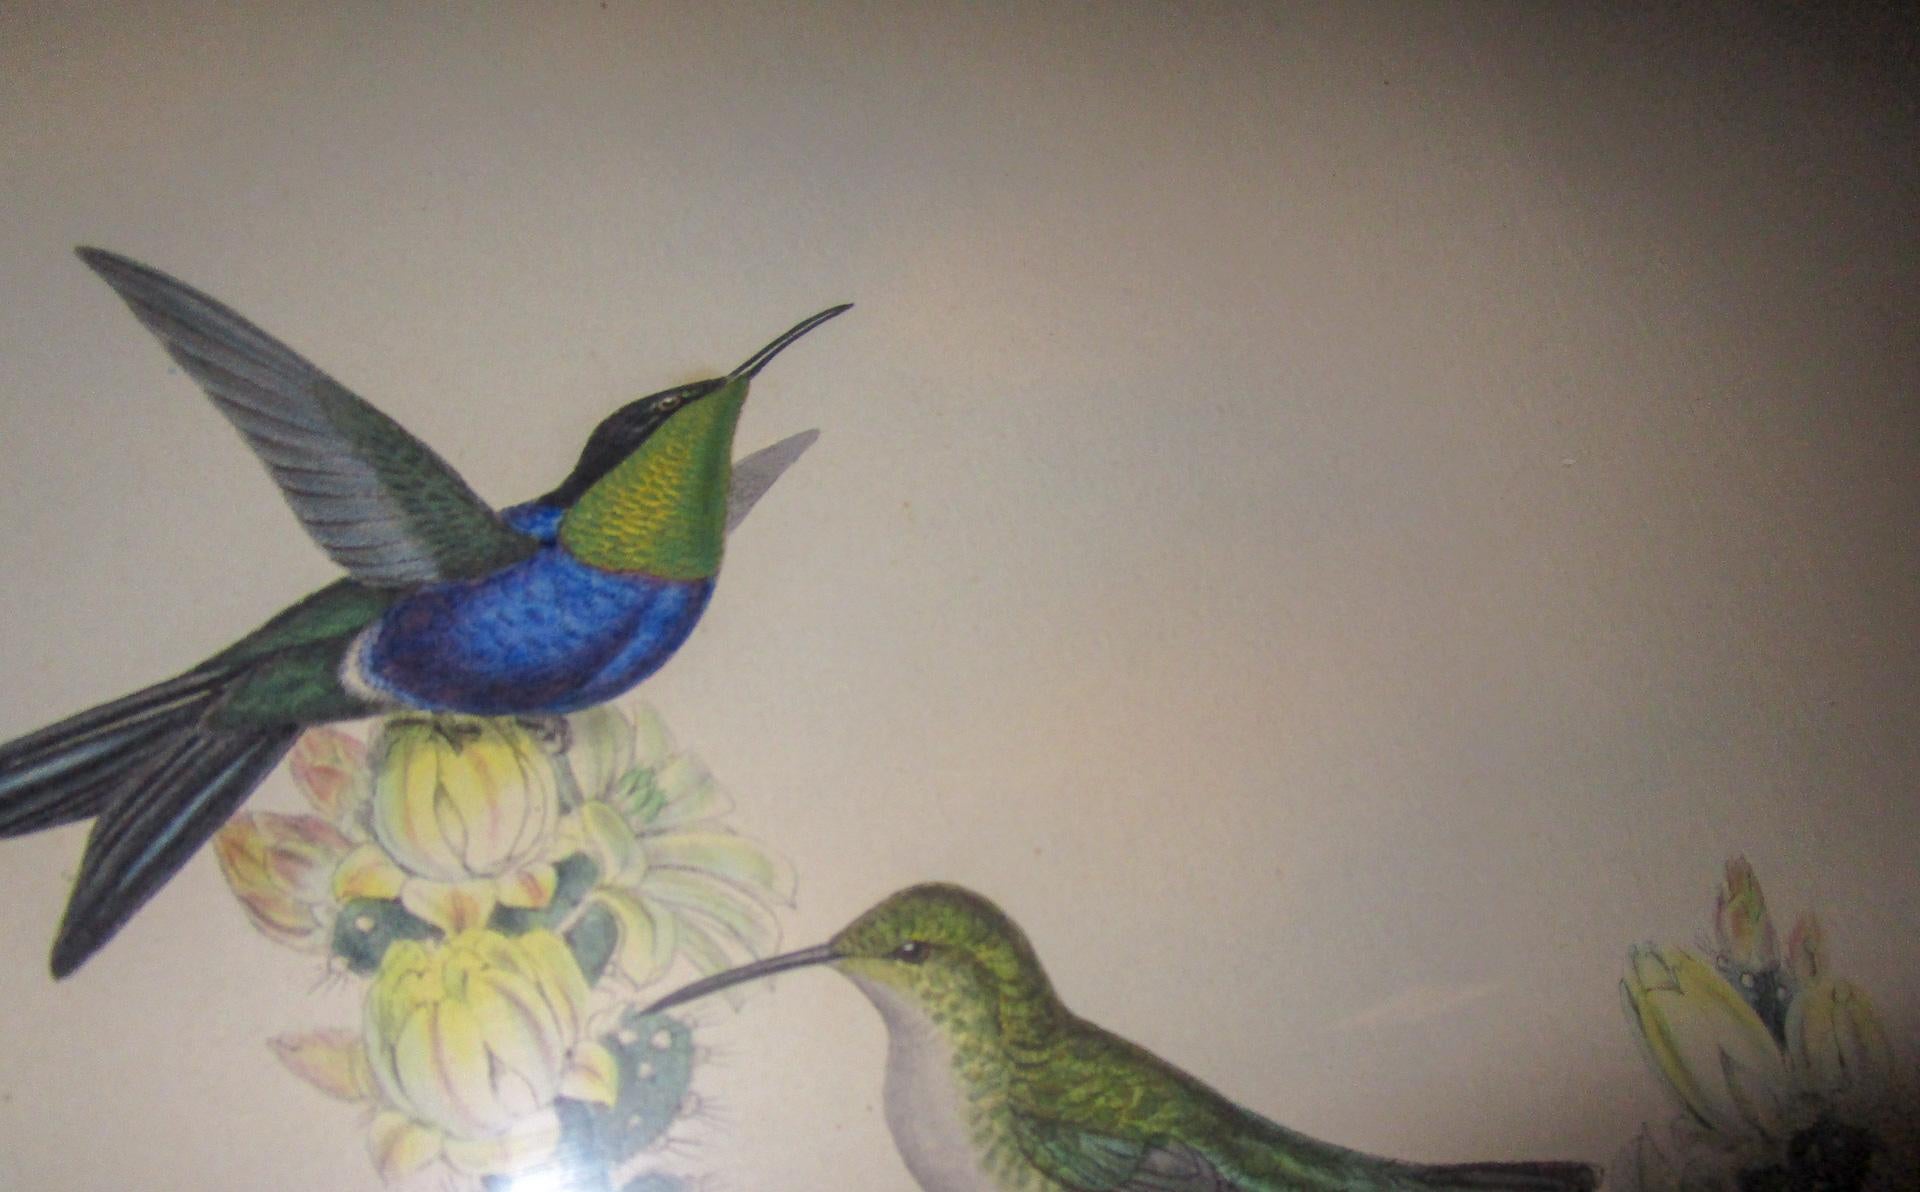 Late 19th Century 19th c John Gould Hand Colored Lithograph Hummingbirds Thalurania Furcata